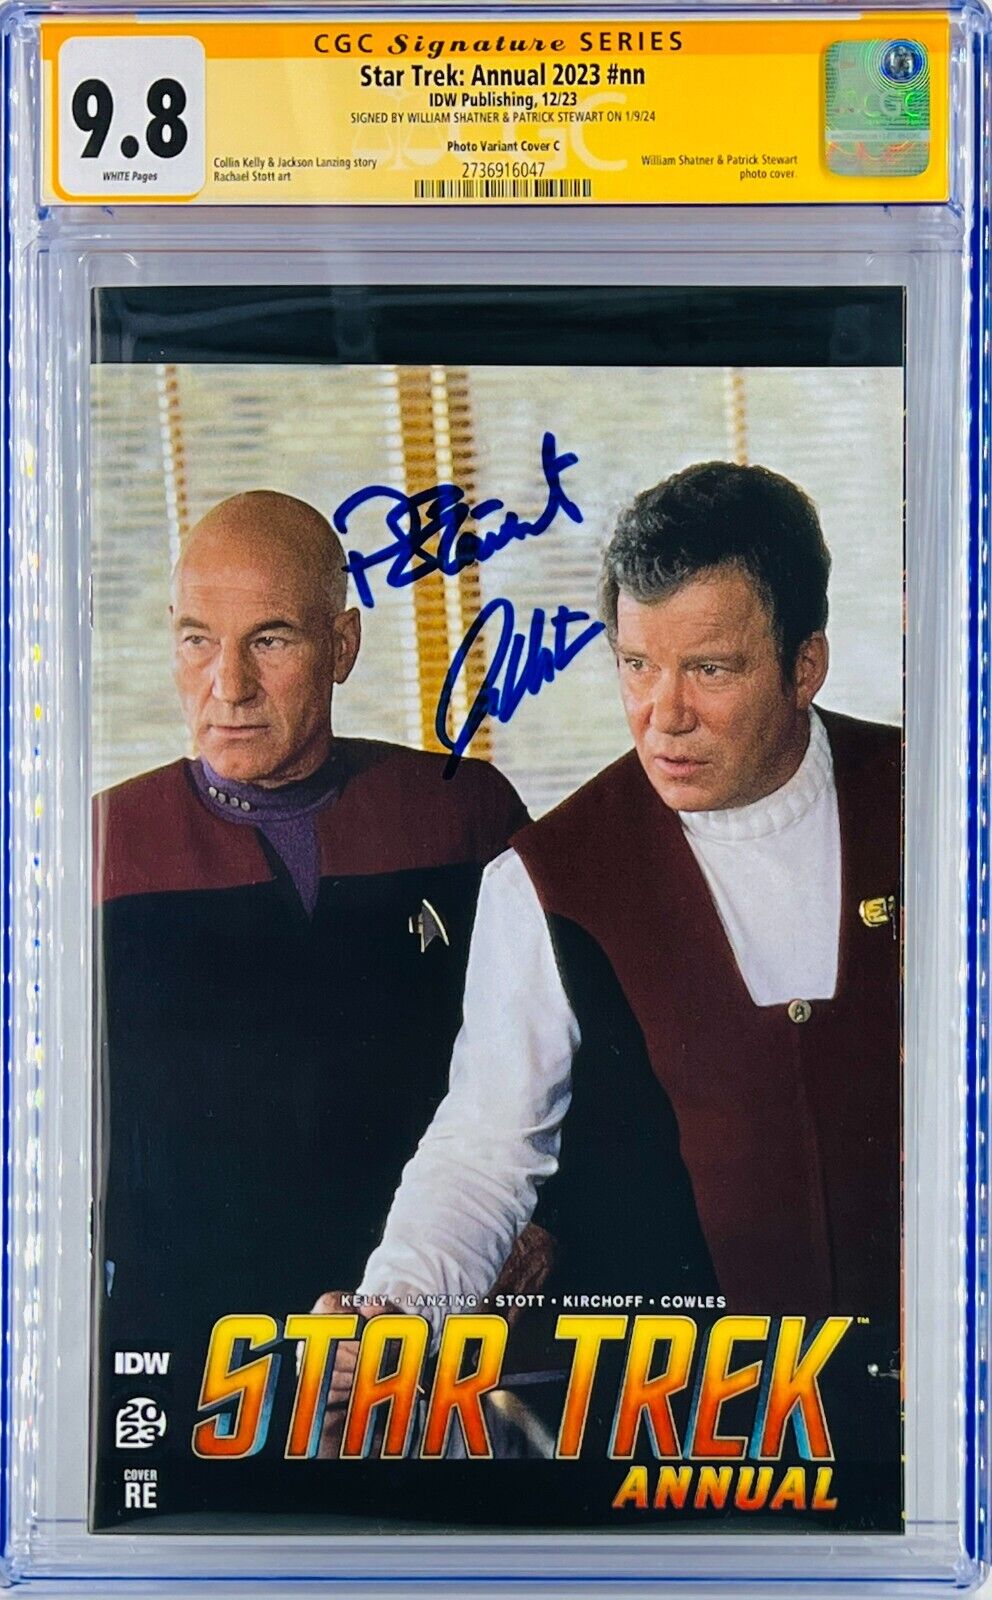 William Shatner Patrick Stewart Signed Photo Cover CGC SS Graded 9.8 Star Trek